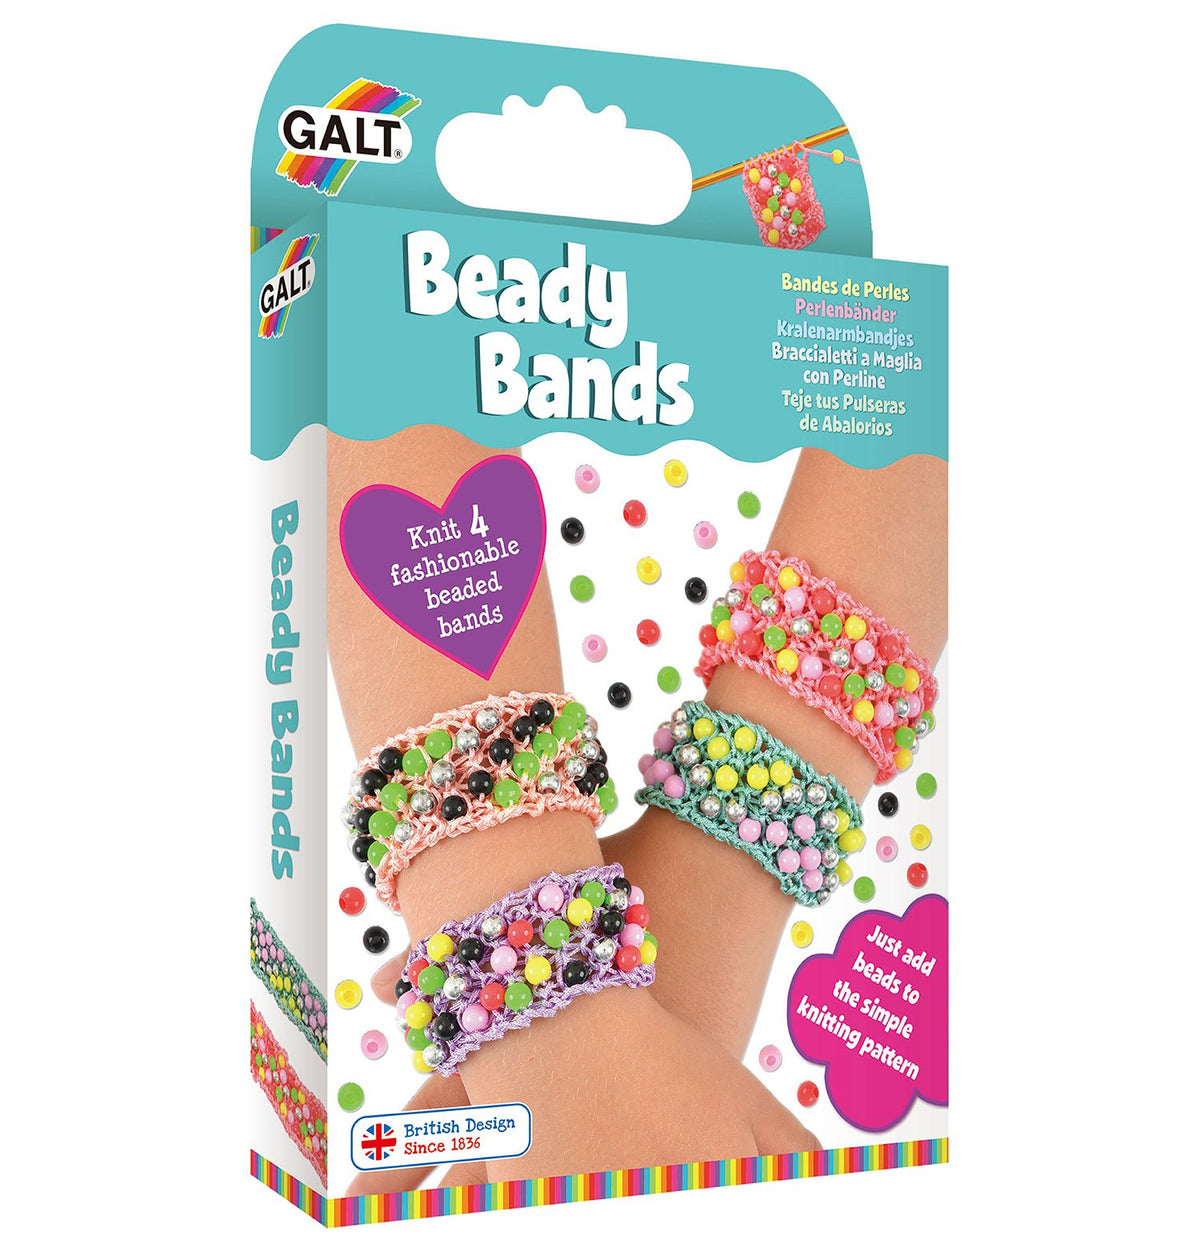 Beady Bands - Galt